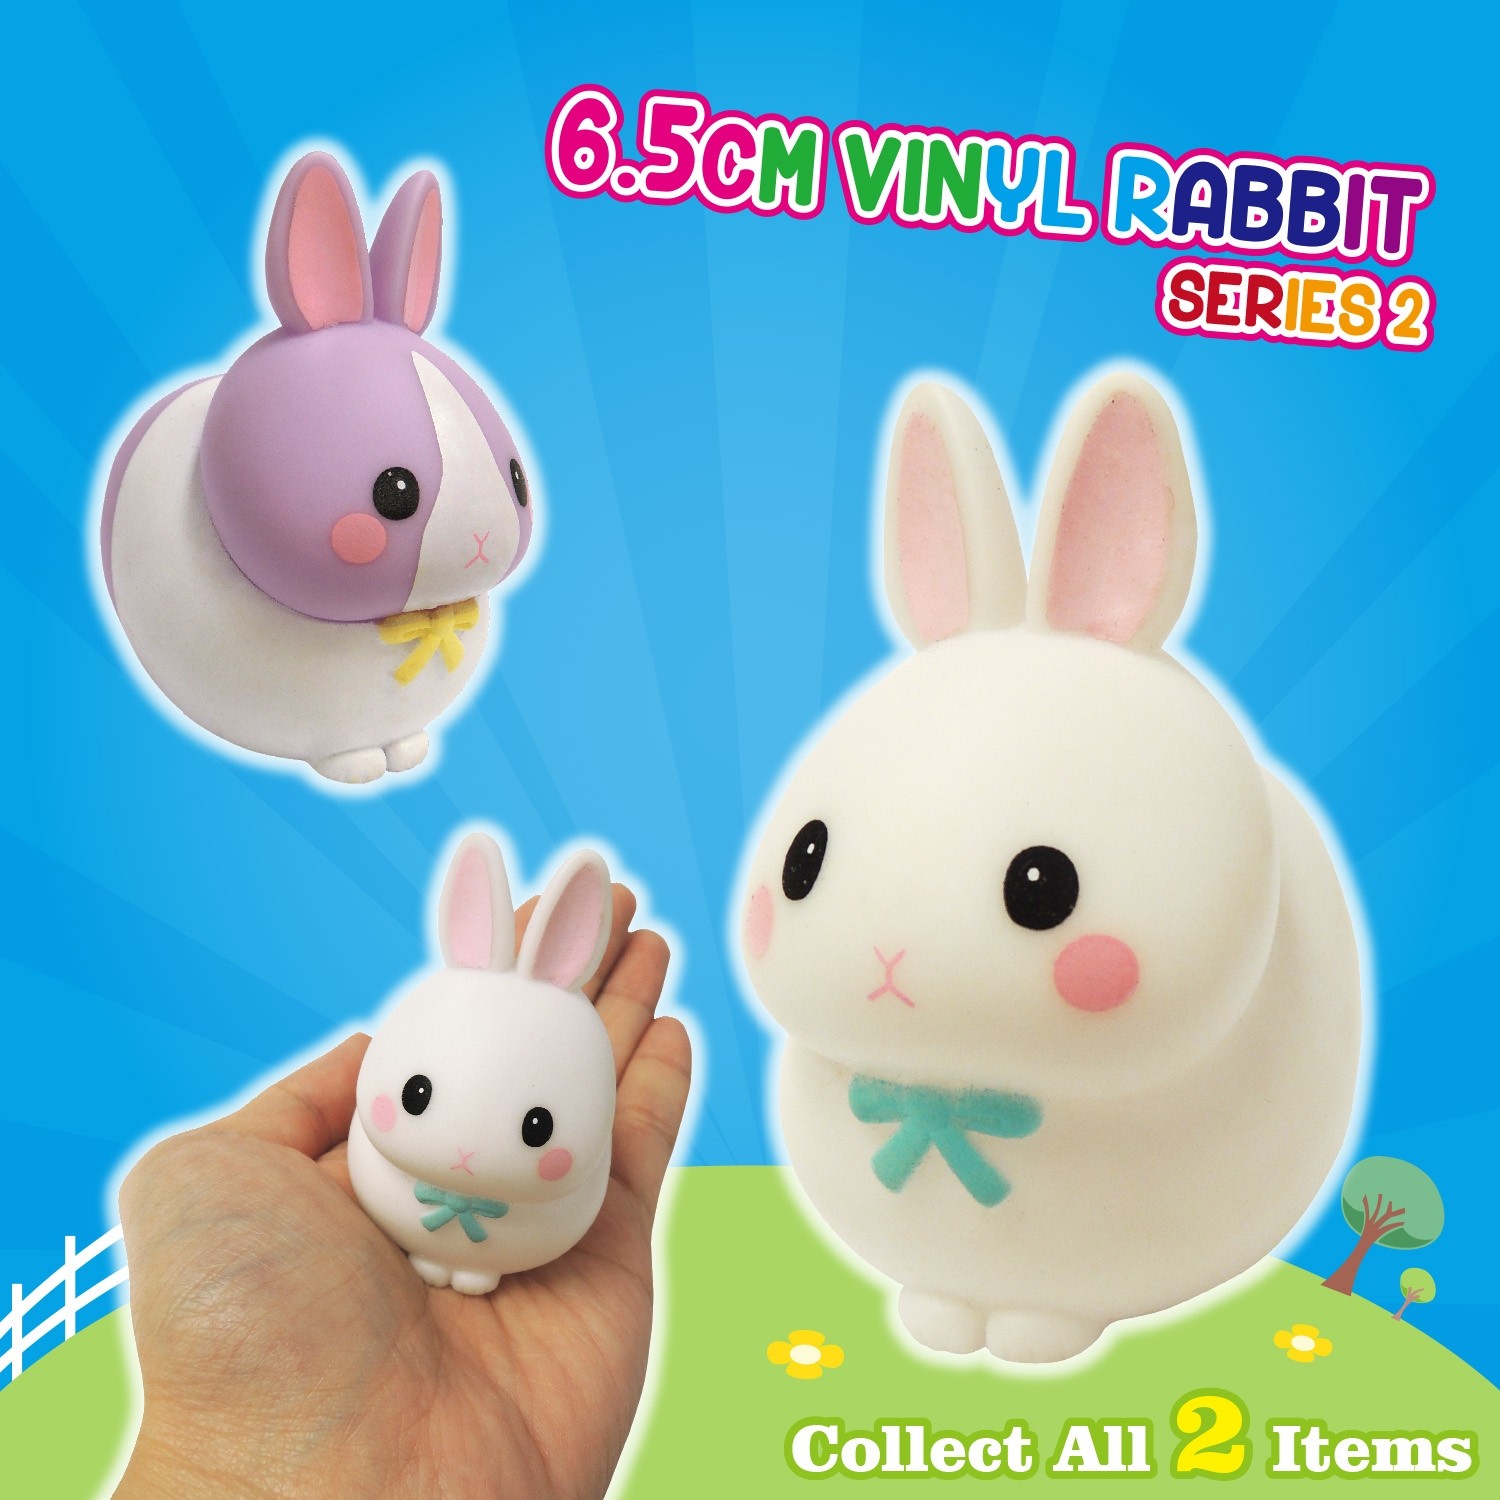 6.5cm Vinyl Rabbit - Series 2